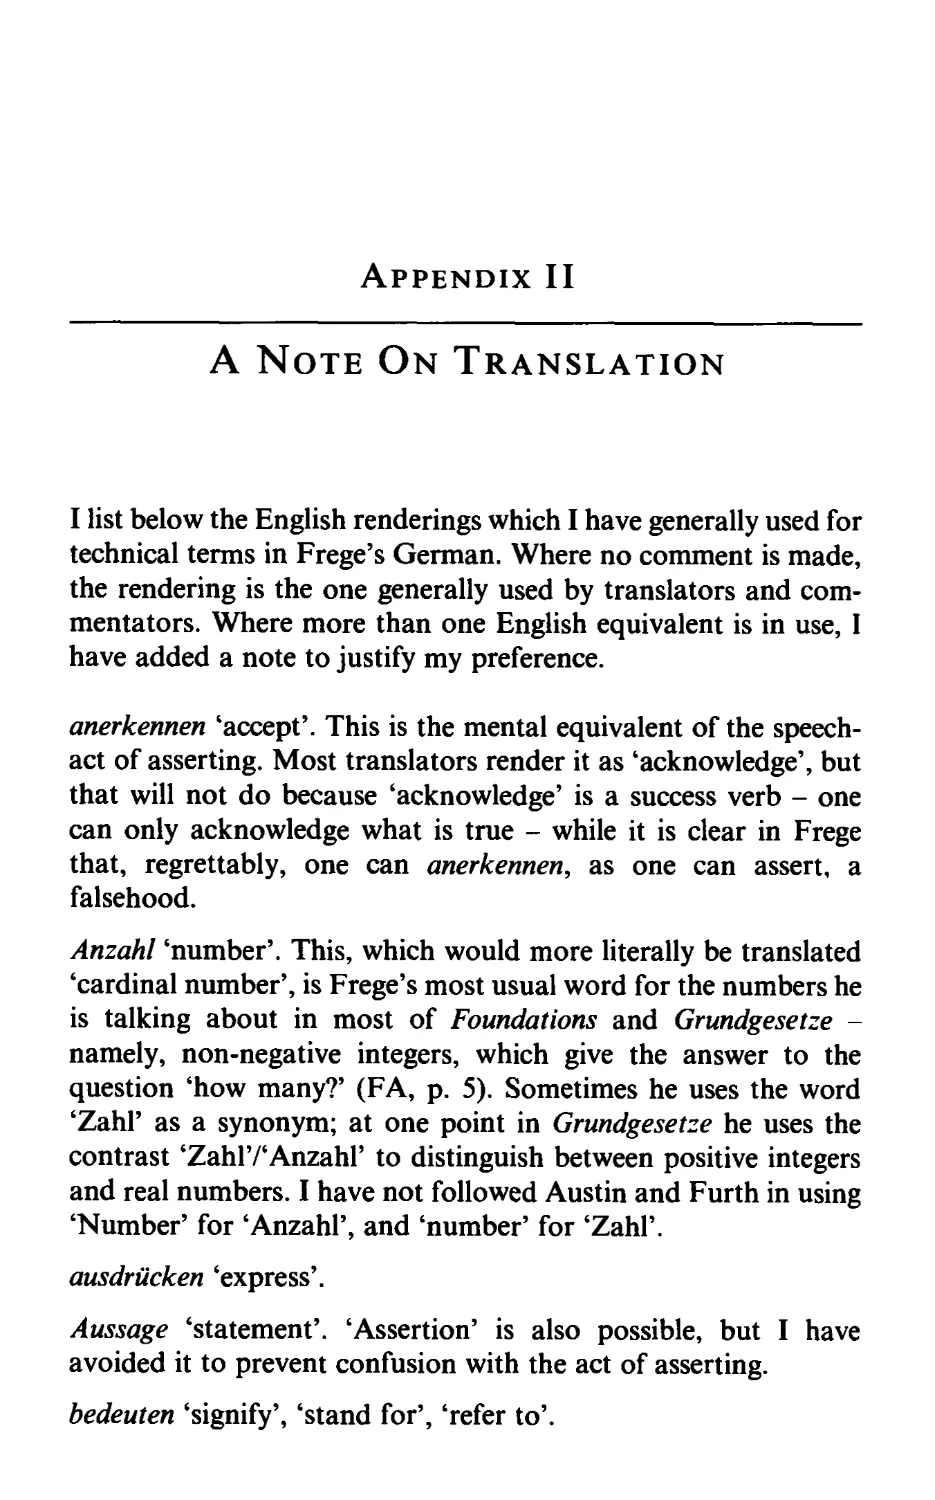 Appendix II. A Note on Translation